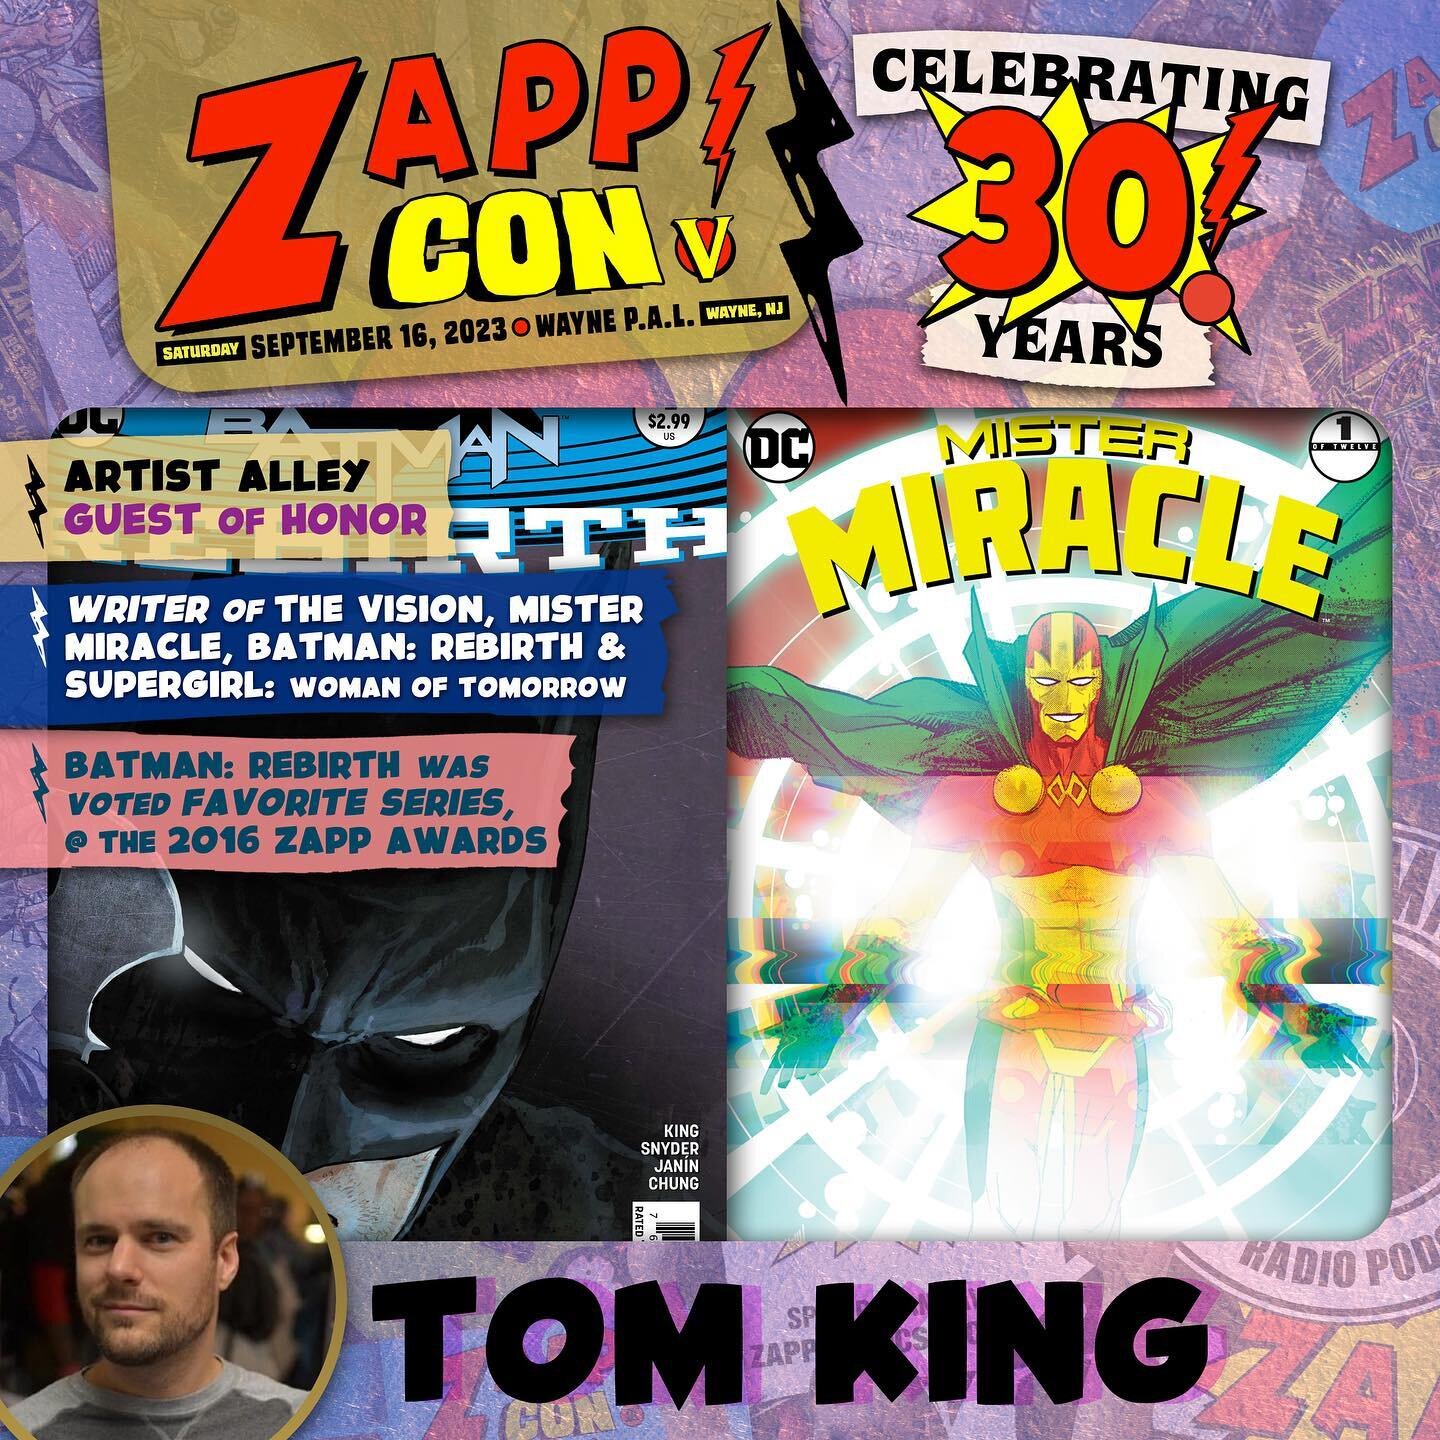 THE KING @tomking_tk is coming to Zapp Con 5!

#zappcomics #zappcon #zappconnj #zappcon5 #artistalley #panels #waynenj #njevents #comicbookartists #comicbookwriters #batman #dc #mistermiracle #tomking #vision #marvel #signing